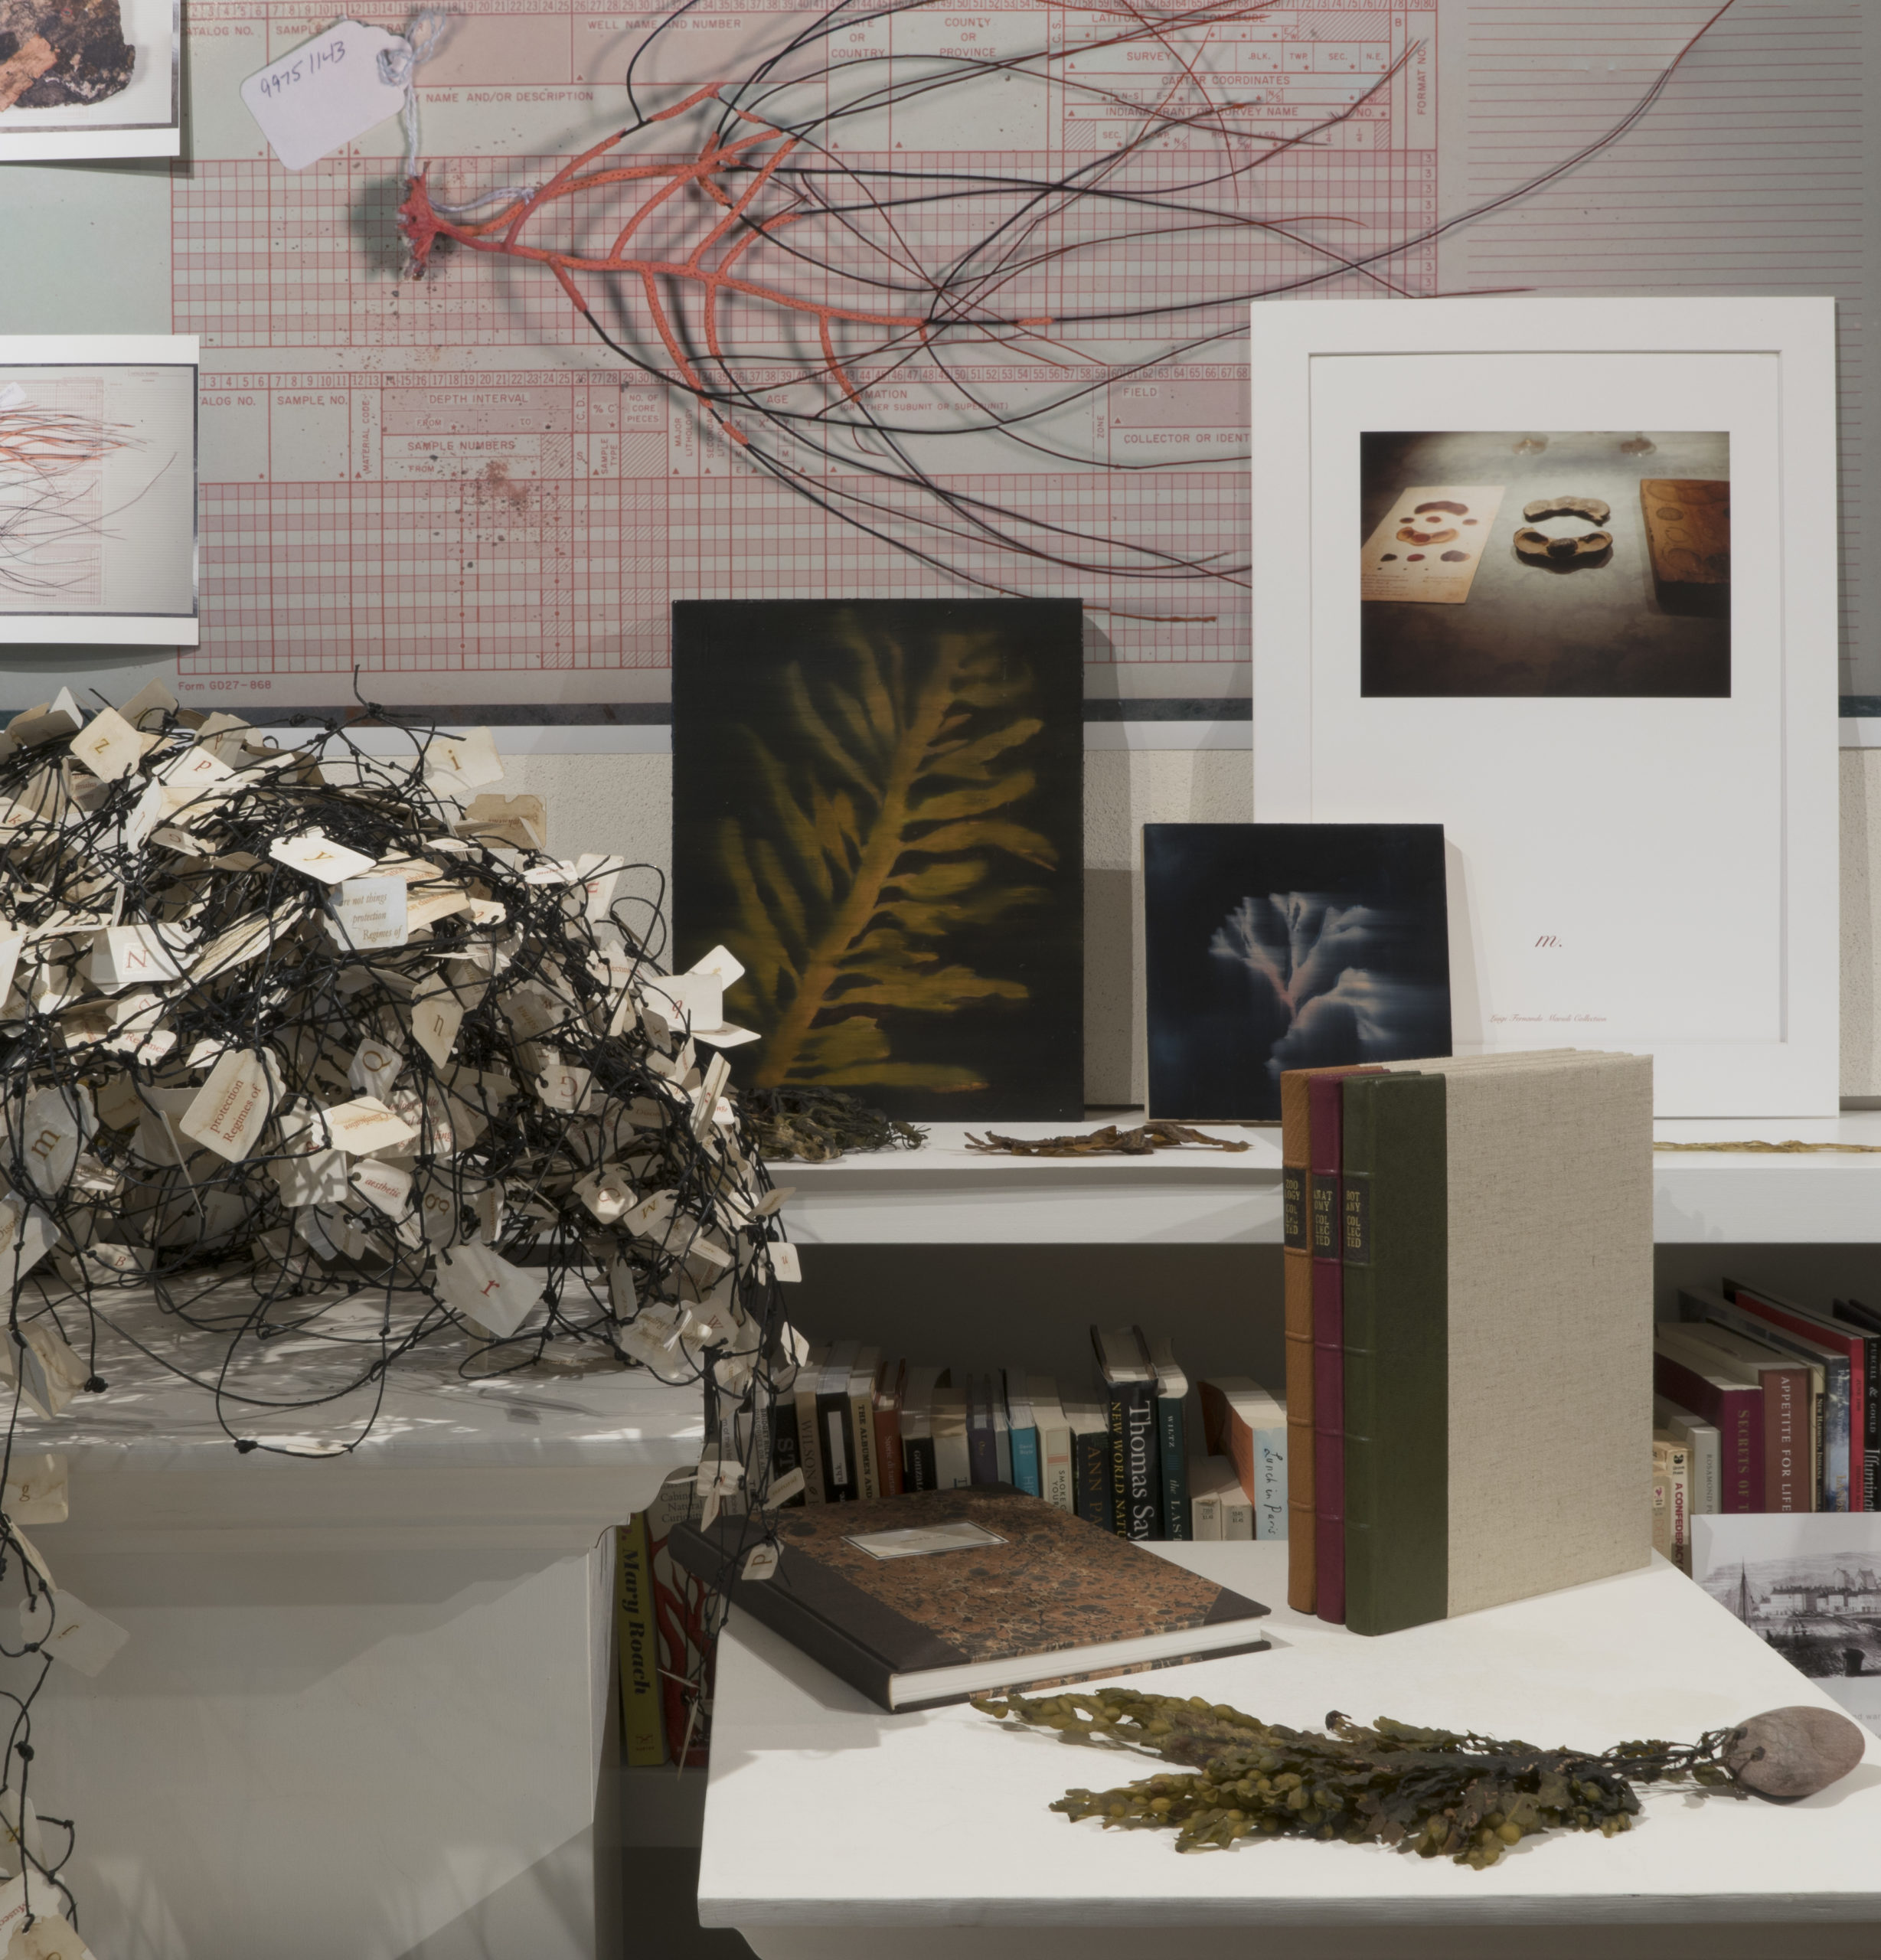 Still life image of Stirrat's organic shaped artwork near a display of books and a bookshelf.